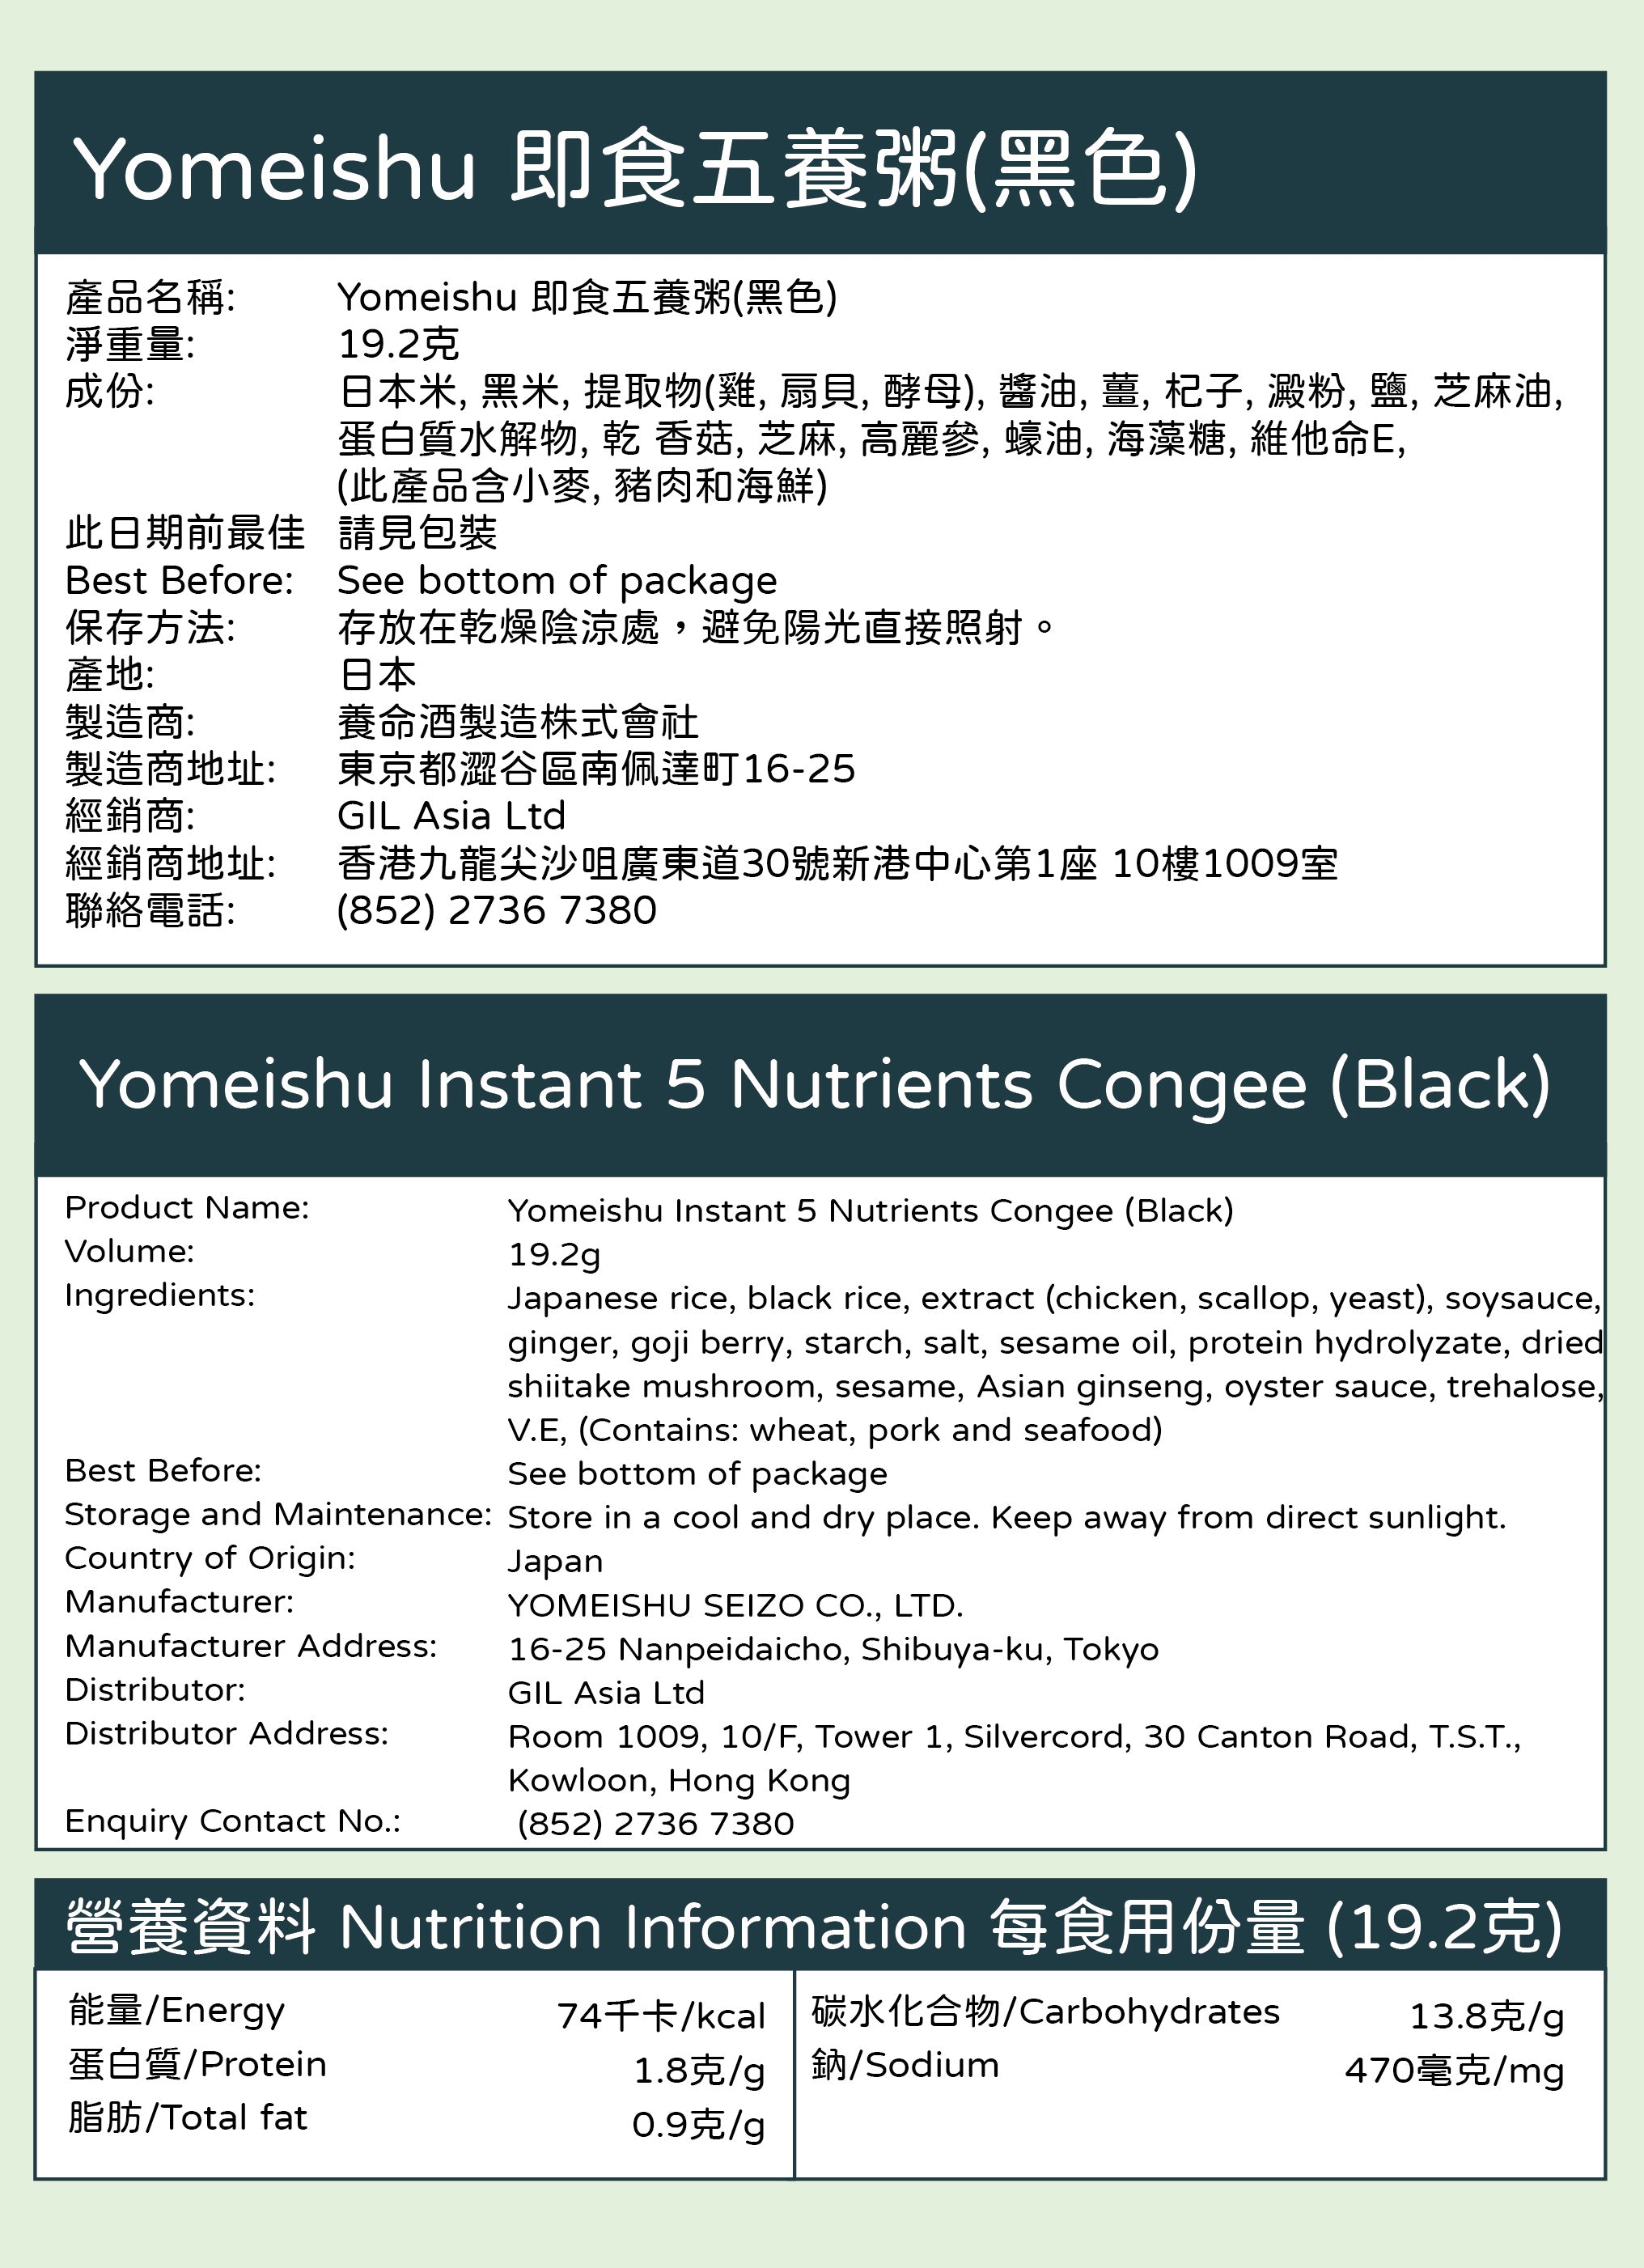 Yomeishu Instant 5 Nutrients Congee